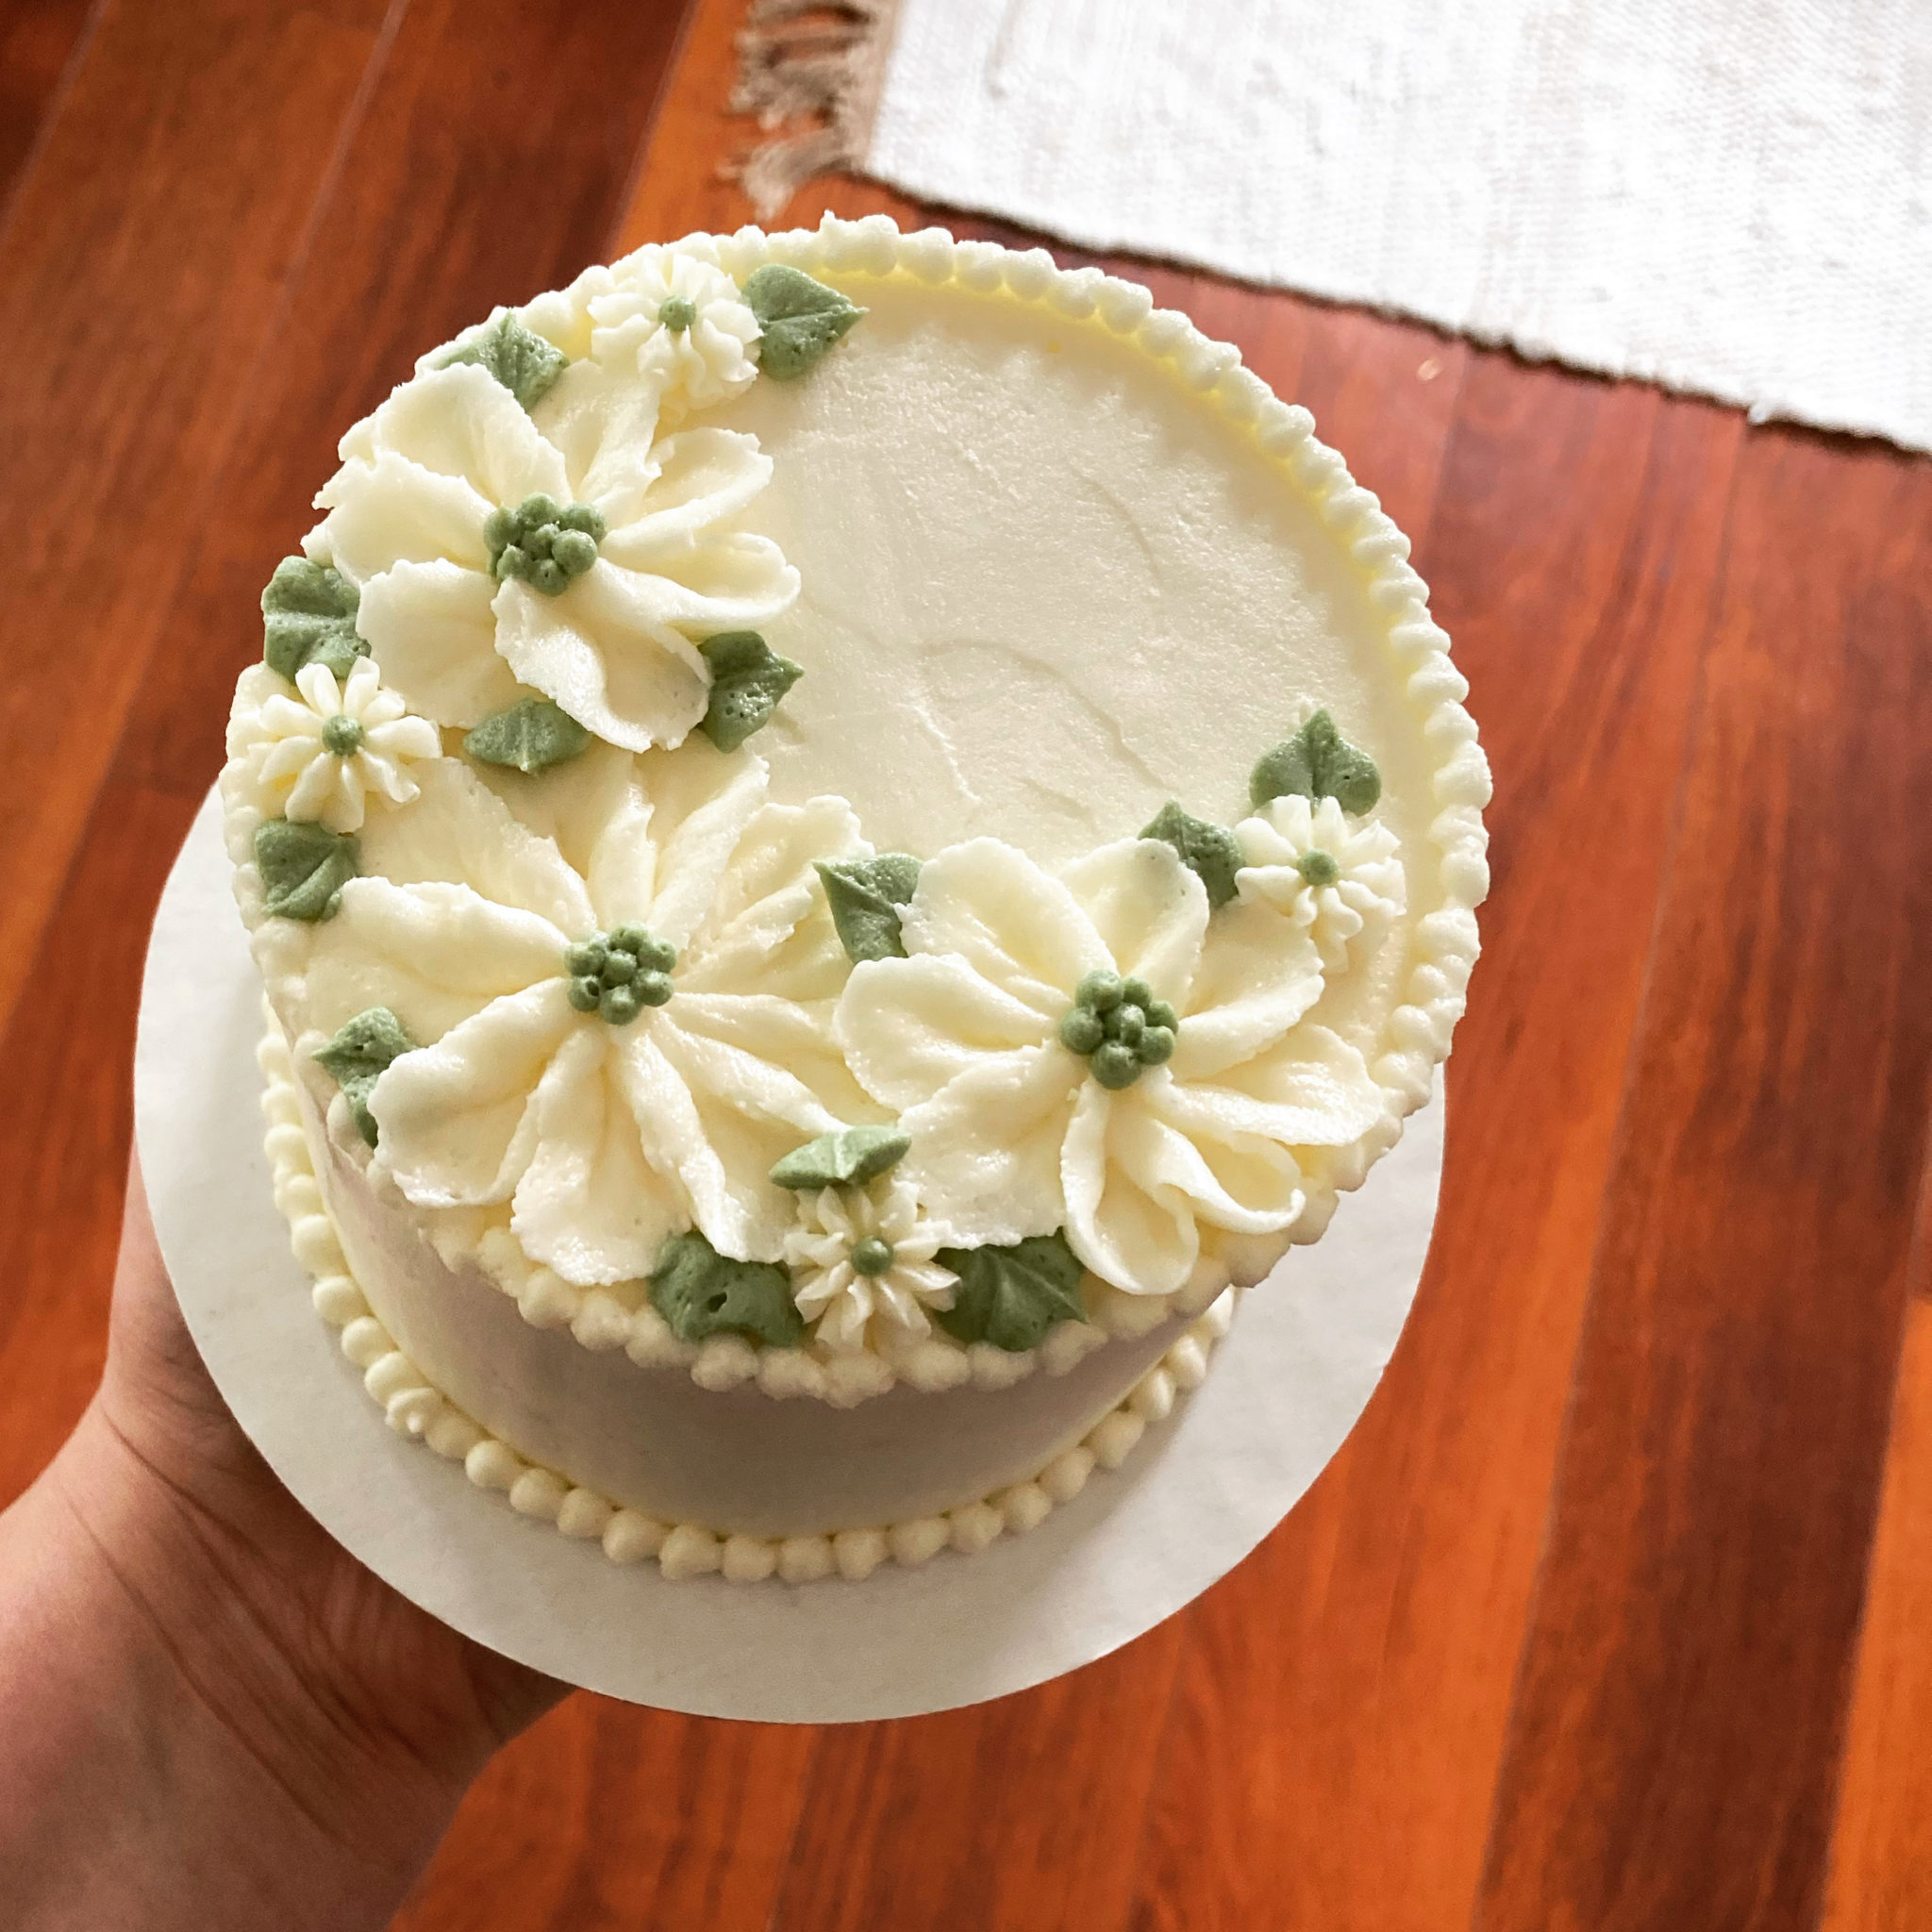 White floral cake